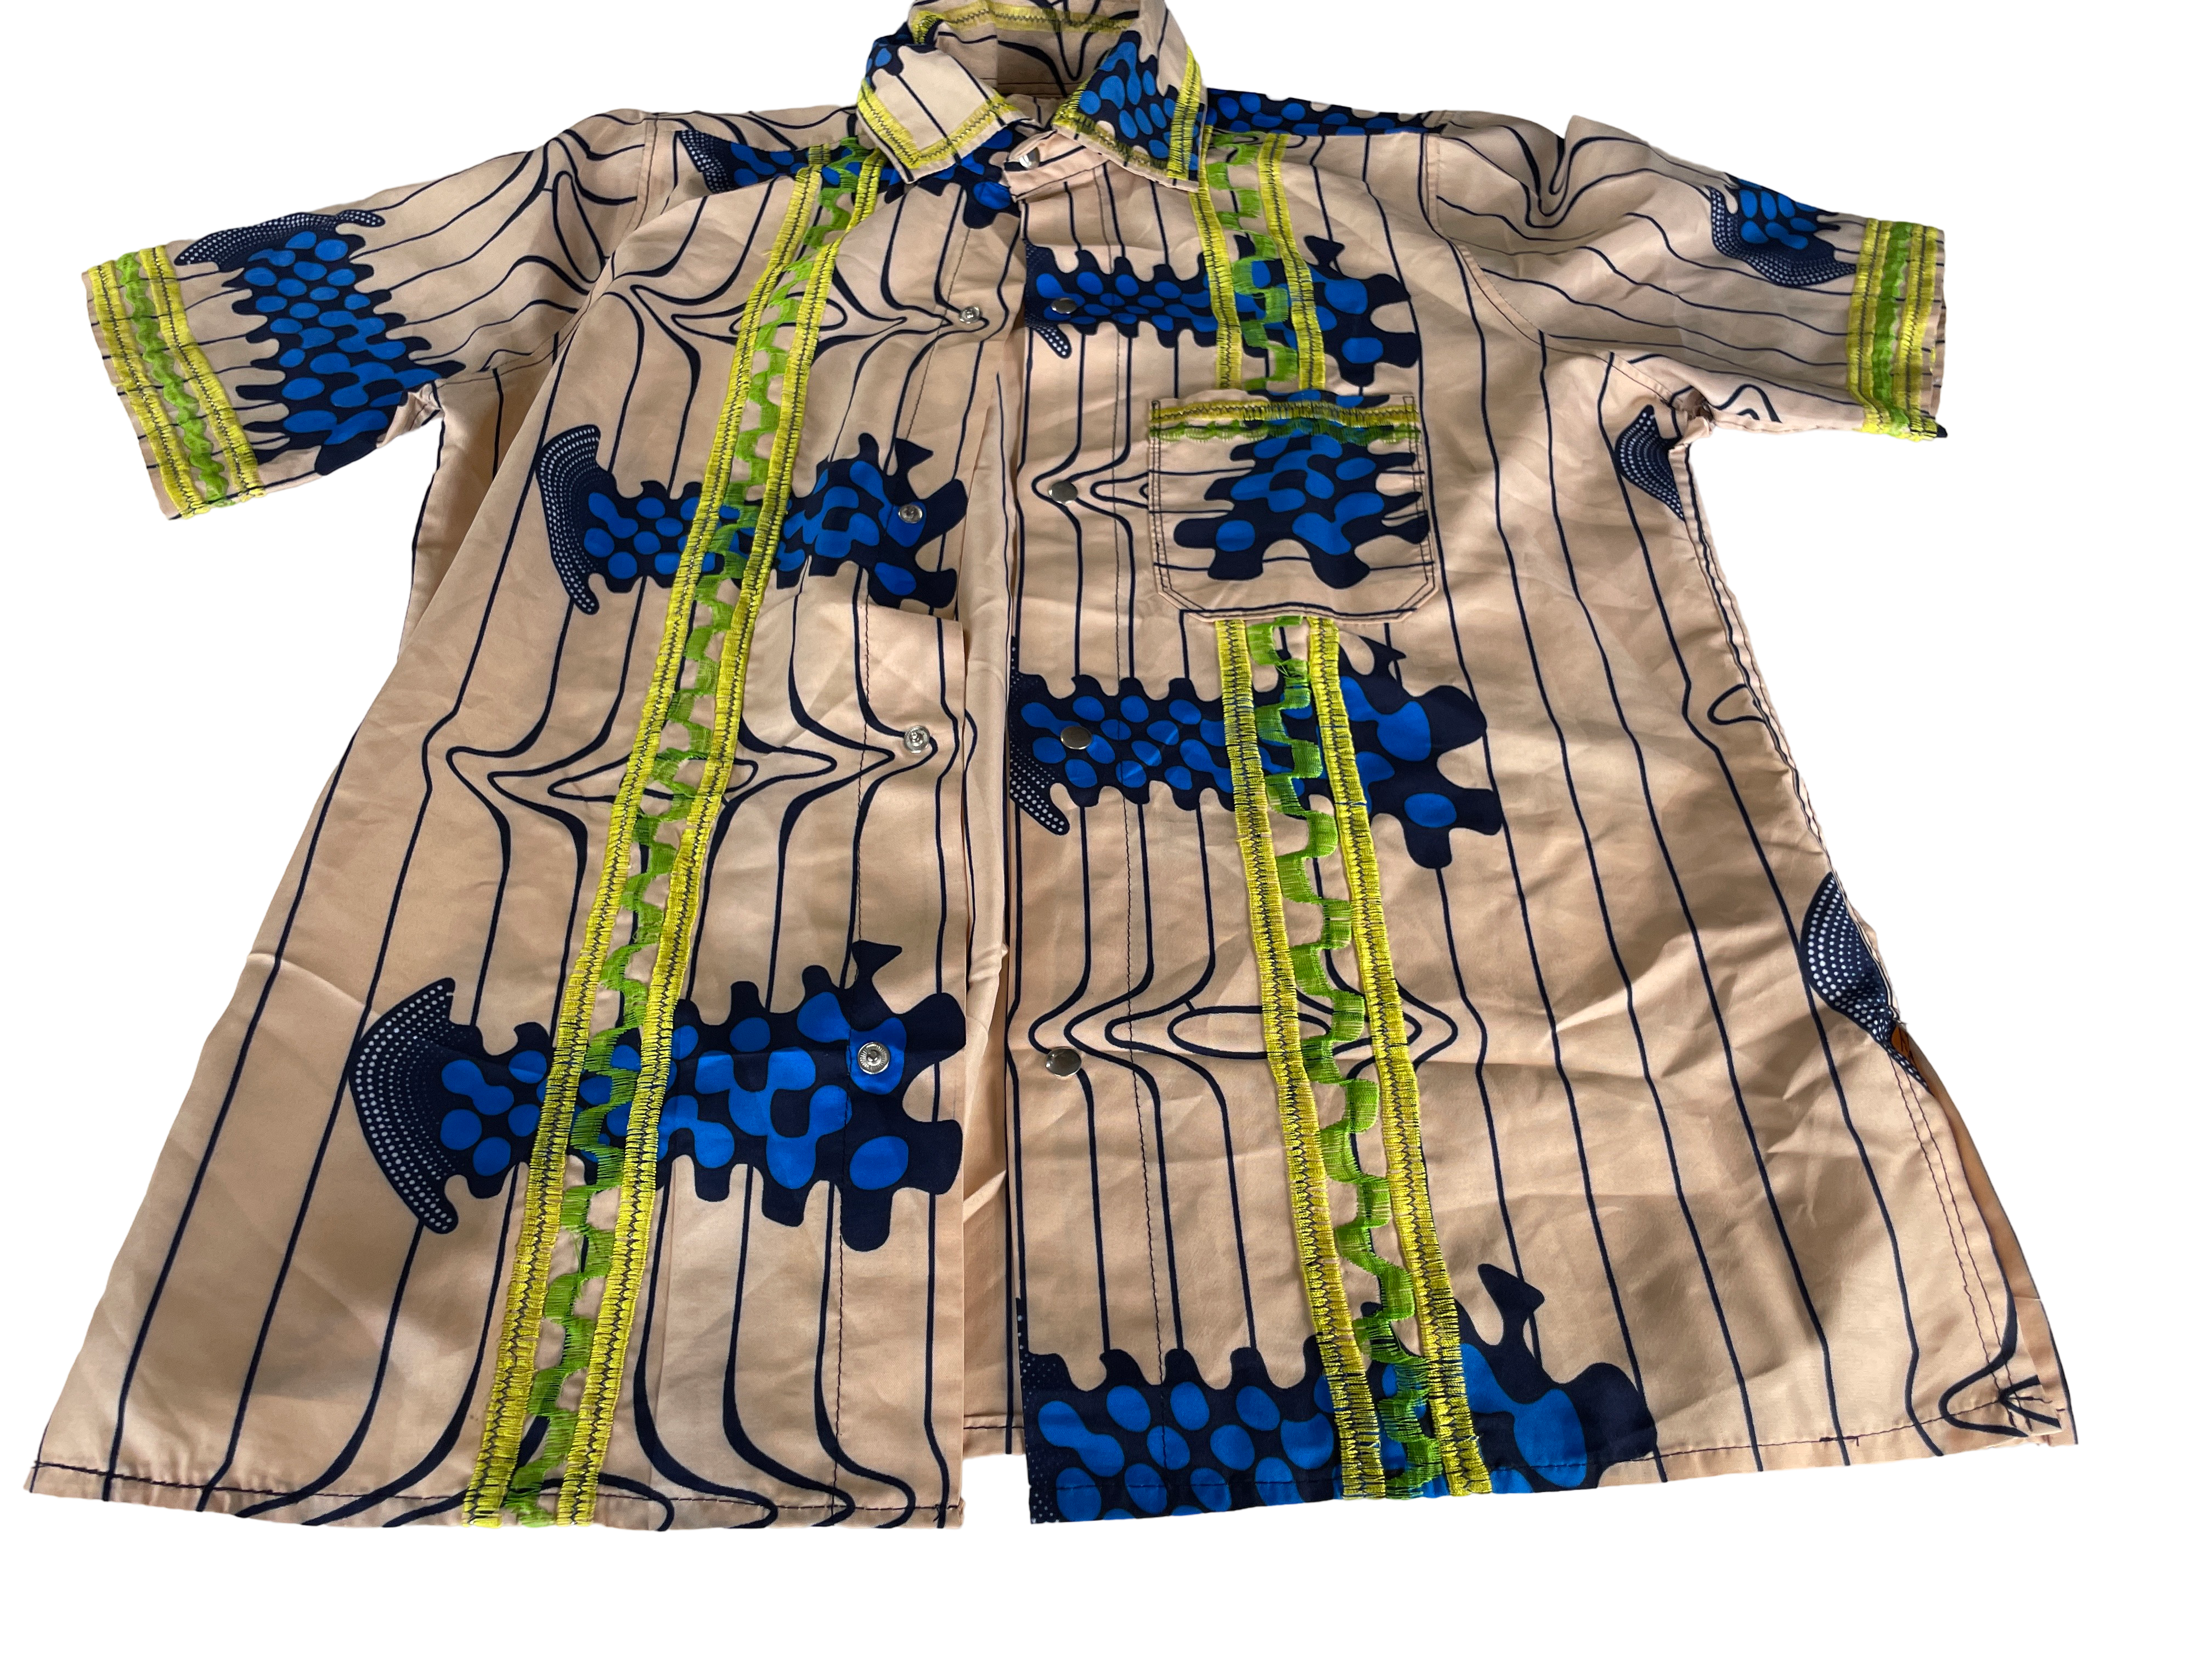 Vintage Western Pattern Shirt. In size medium/large |SKU 5020